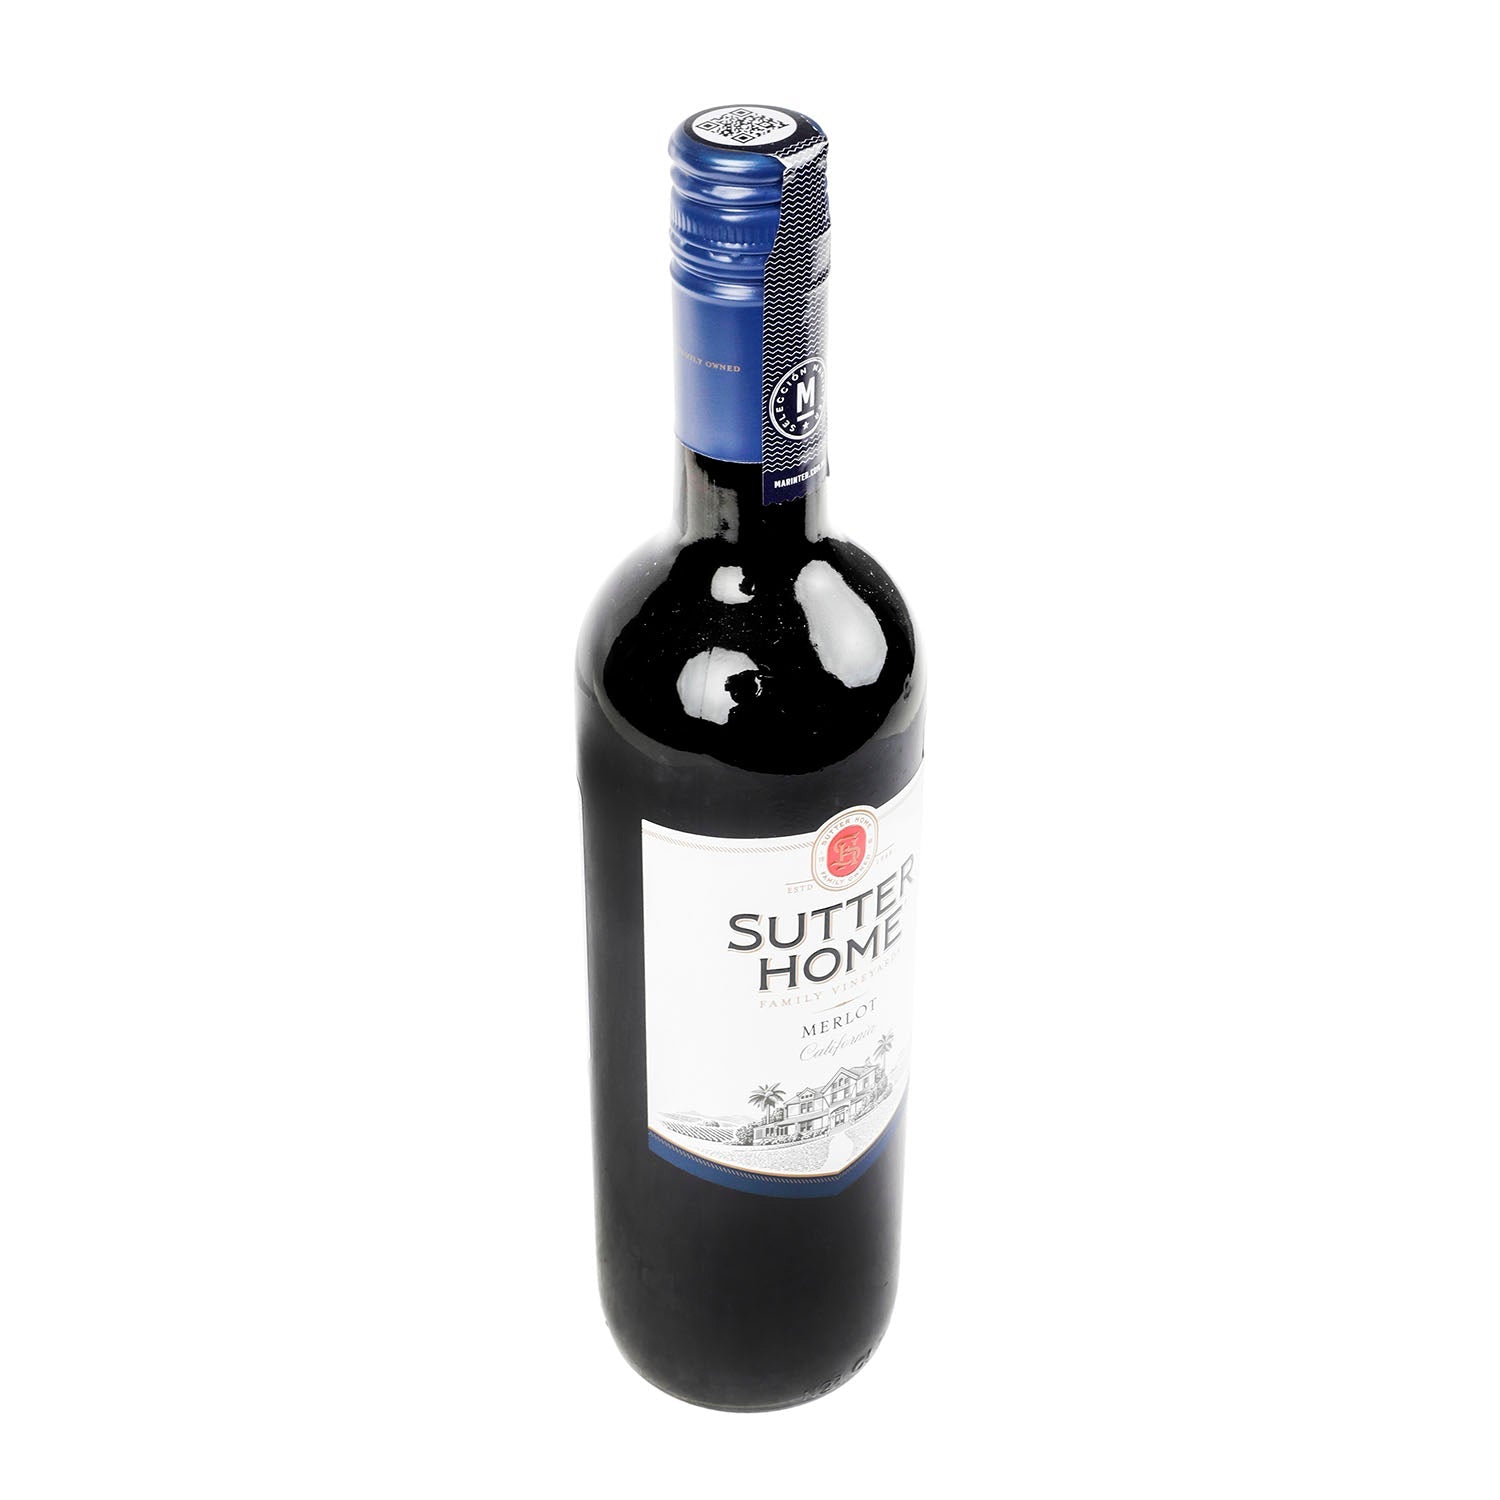 Promo 3x2 - Vino Tinto Sutter Home Merlot de 750 ml